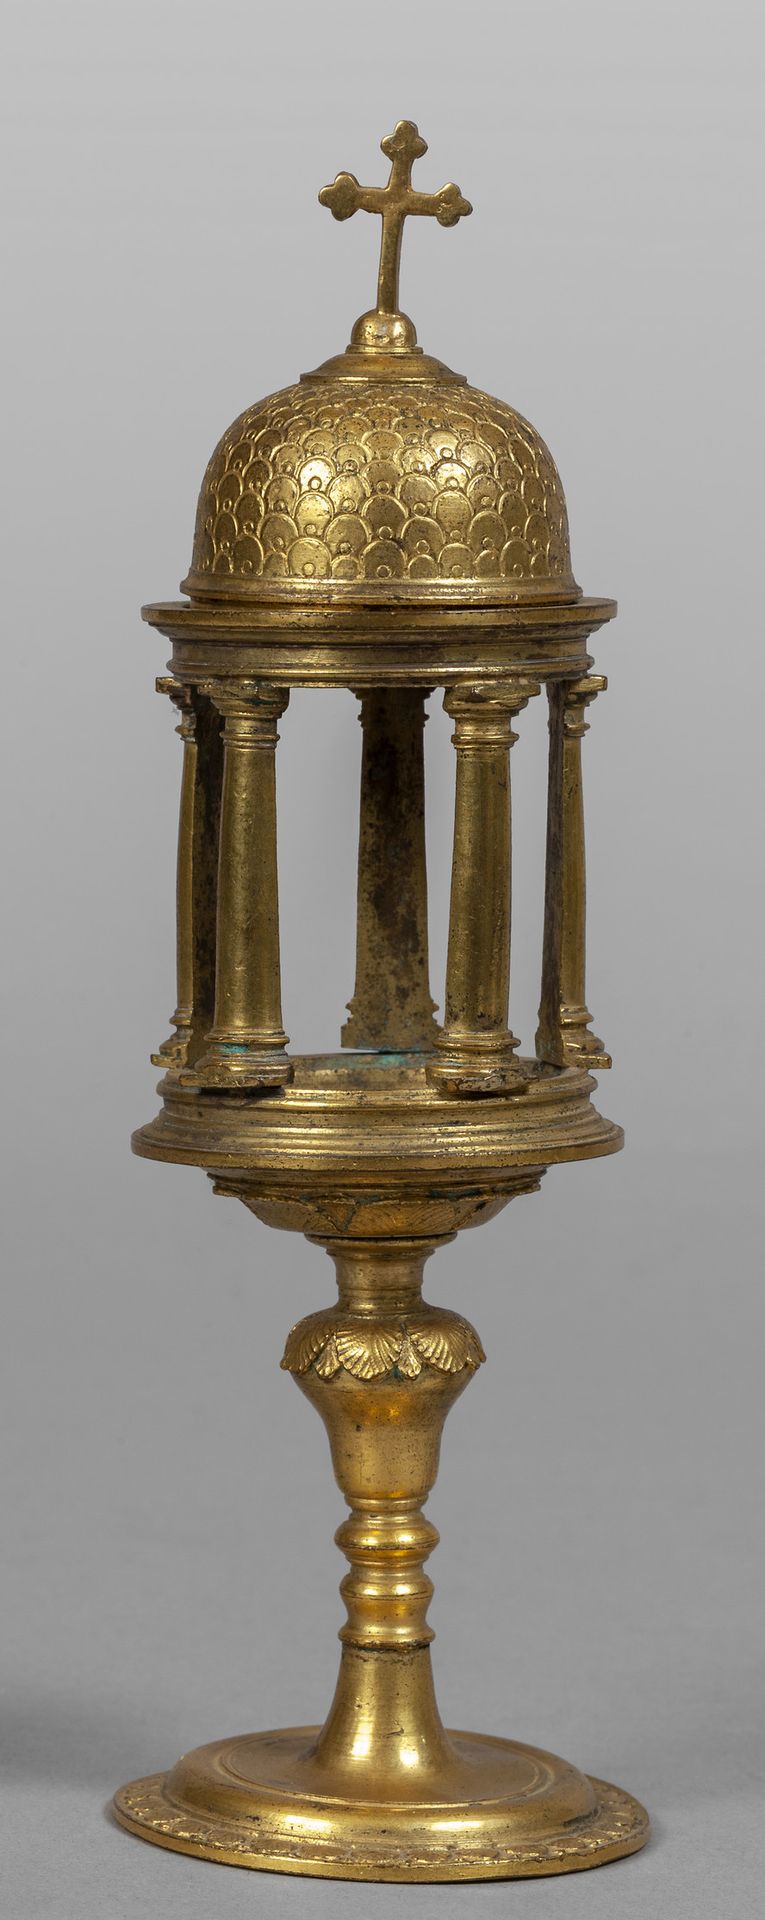 Ostensorio in bronzo dorato, sec. XVII 镀金的青铜僧侣，17世纪
h. Cm.21